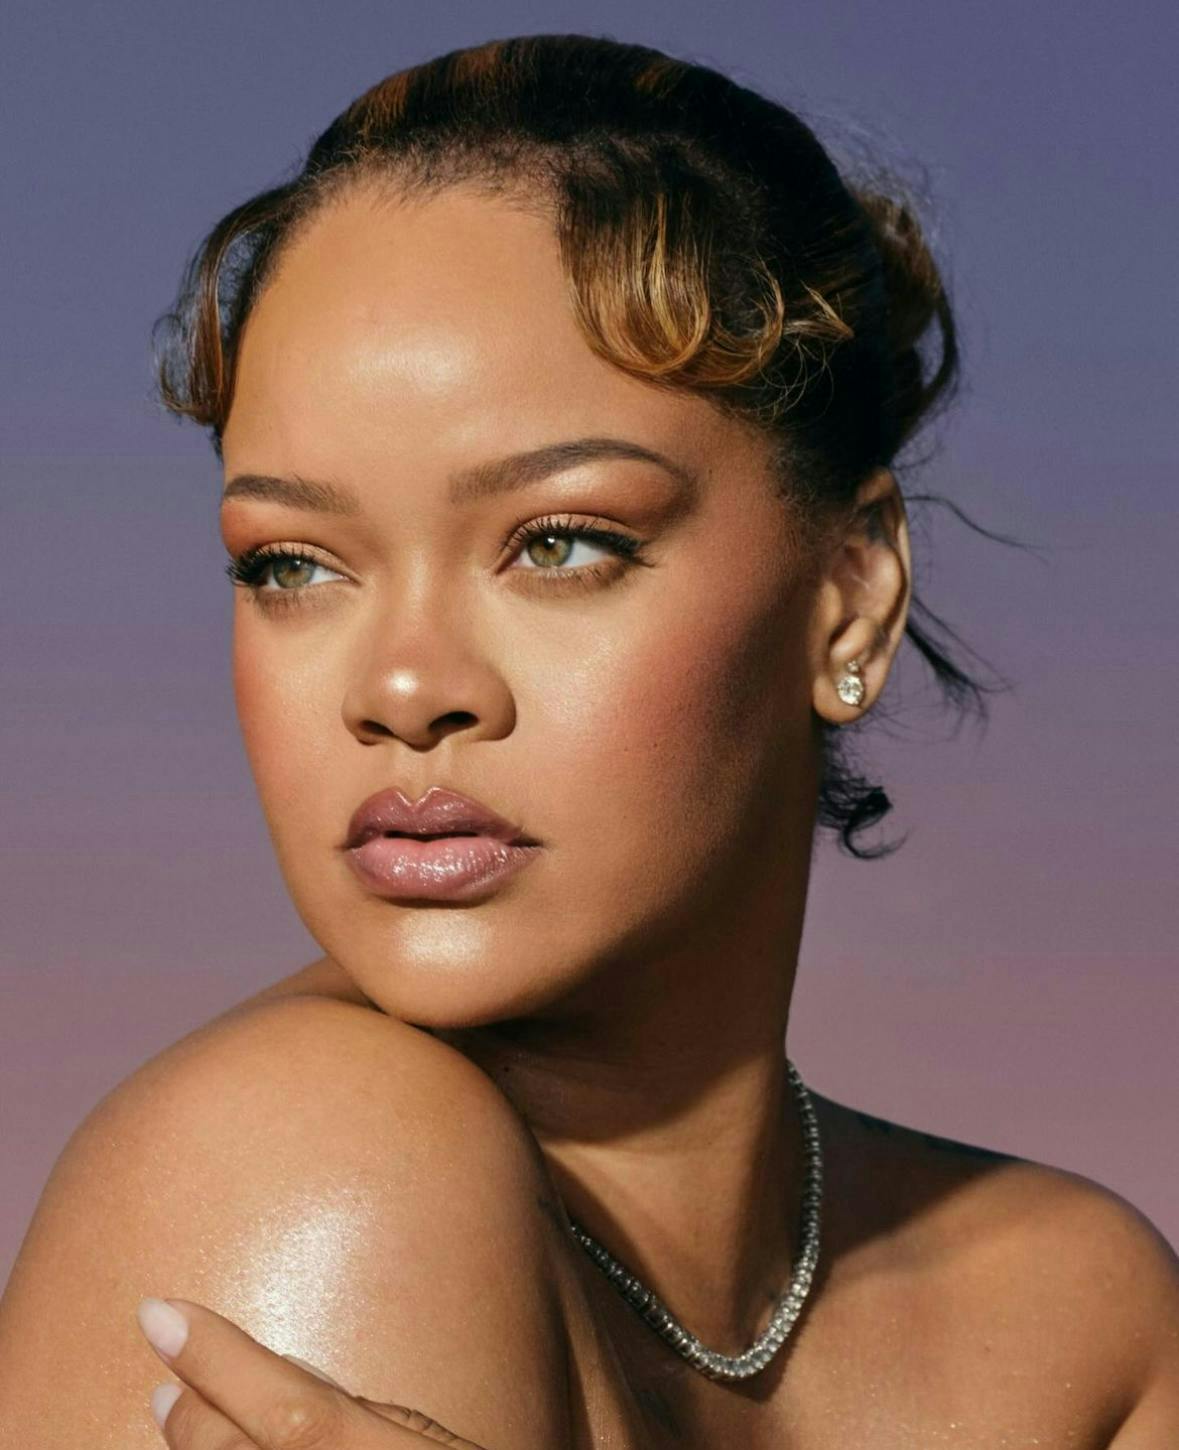 Rihanna poses against a purple backdrop for Fenty Beauty. Courtesy of Fenty Beauty.